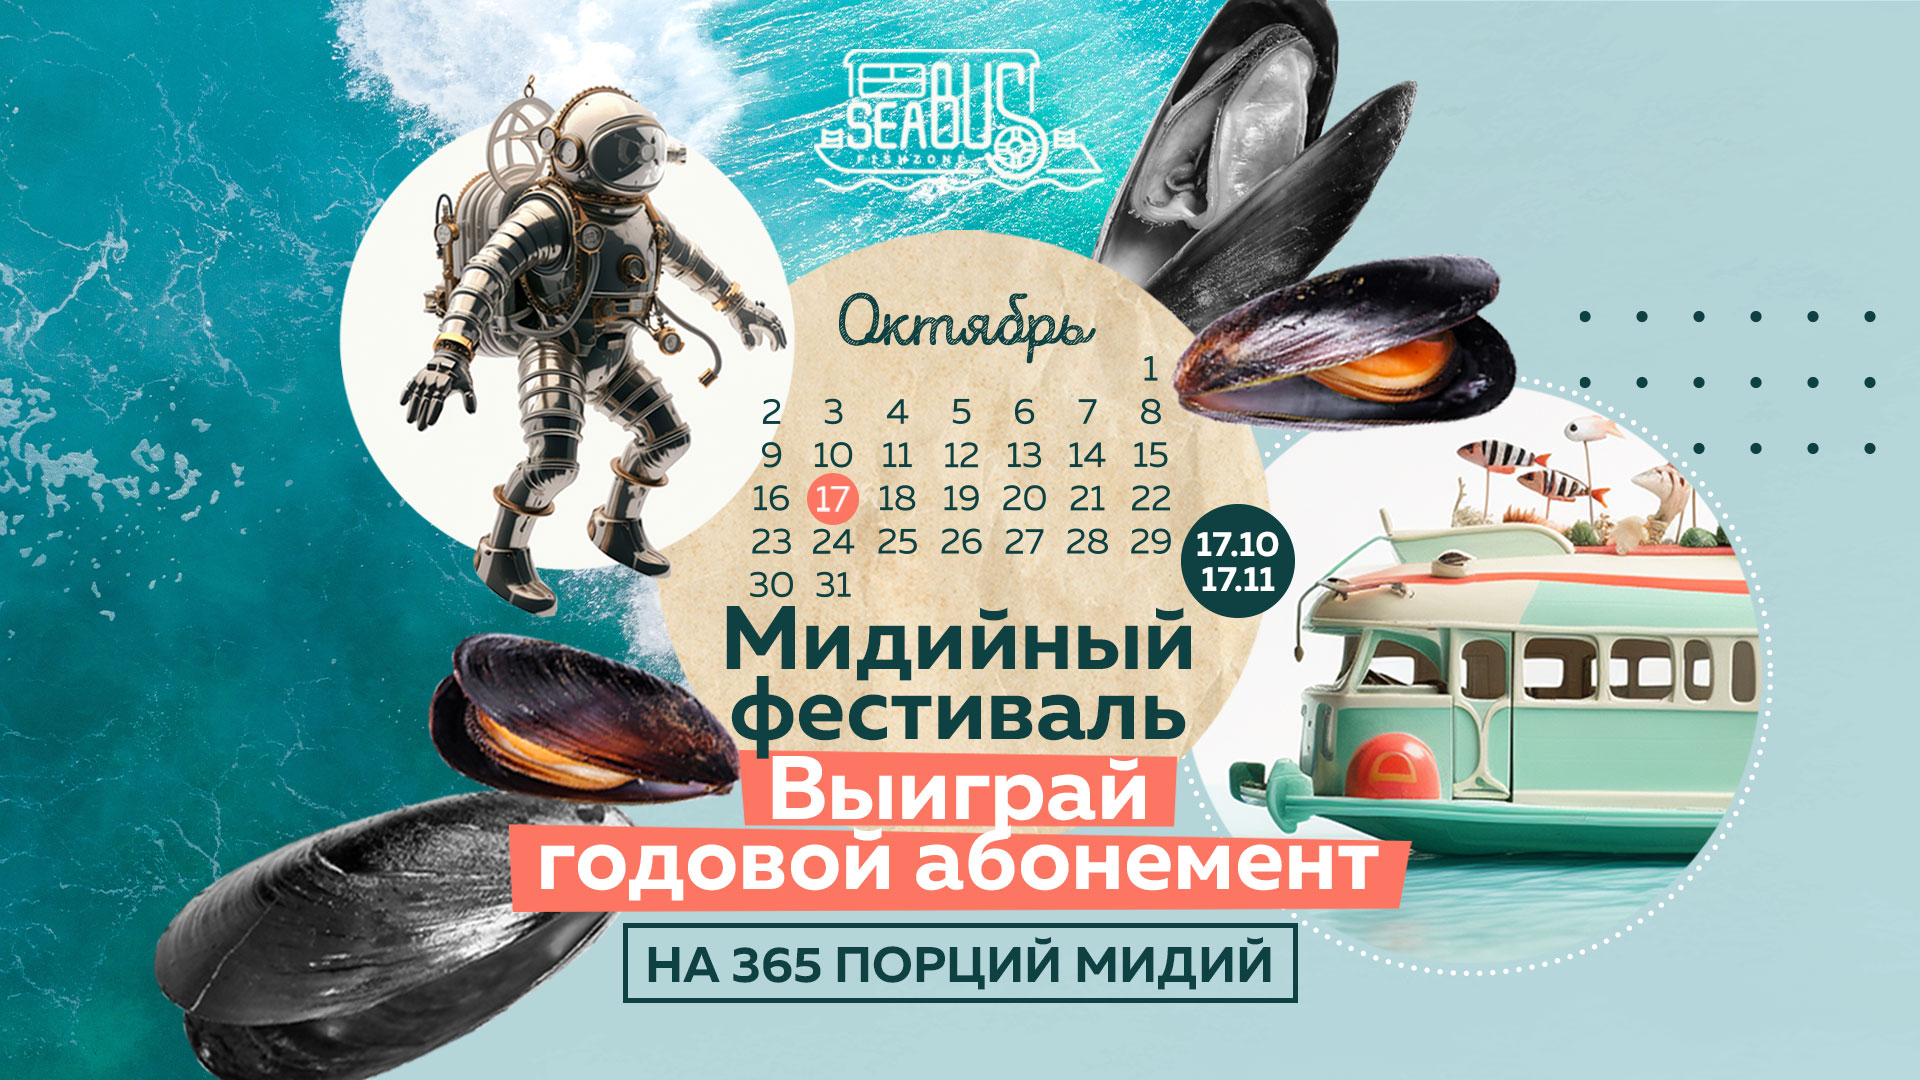 Sea Bus: мидийный фестиваль